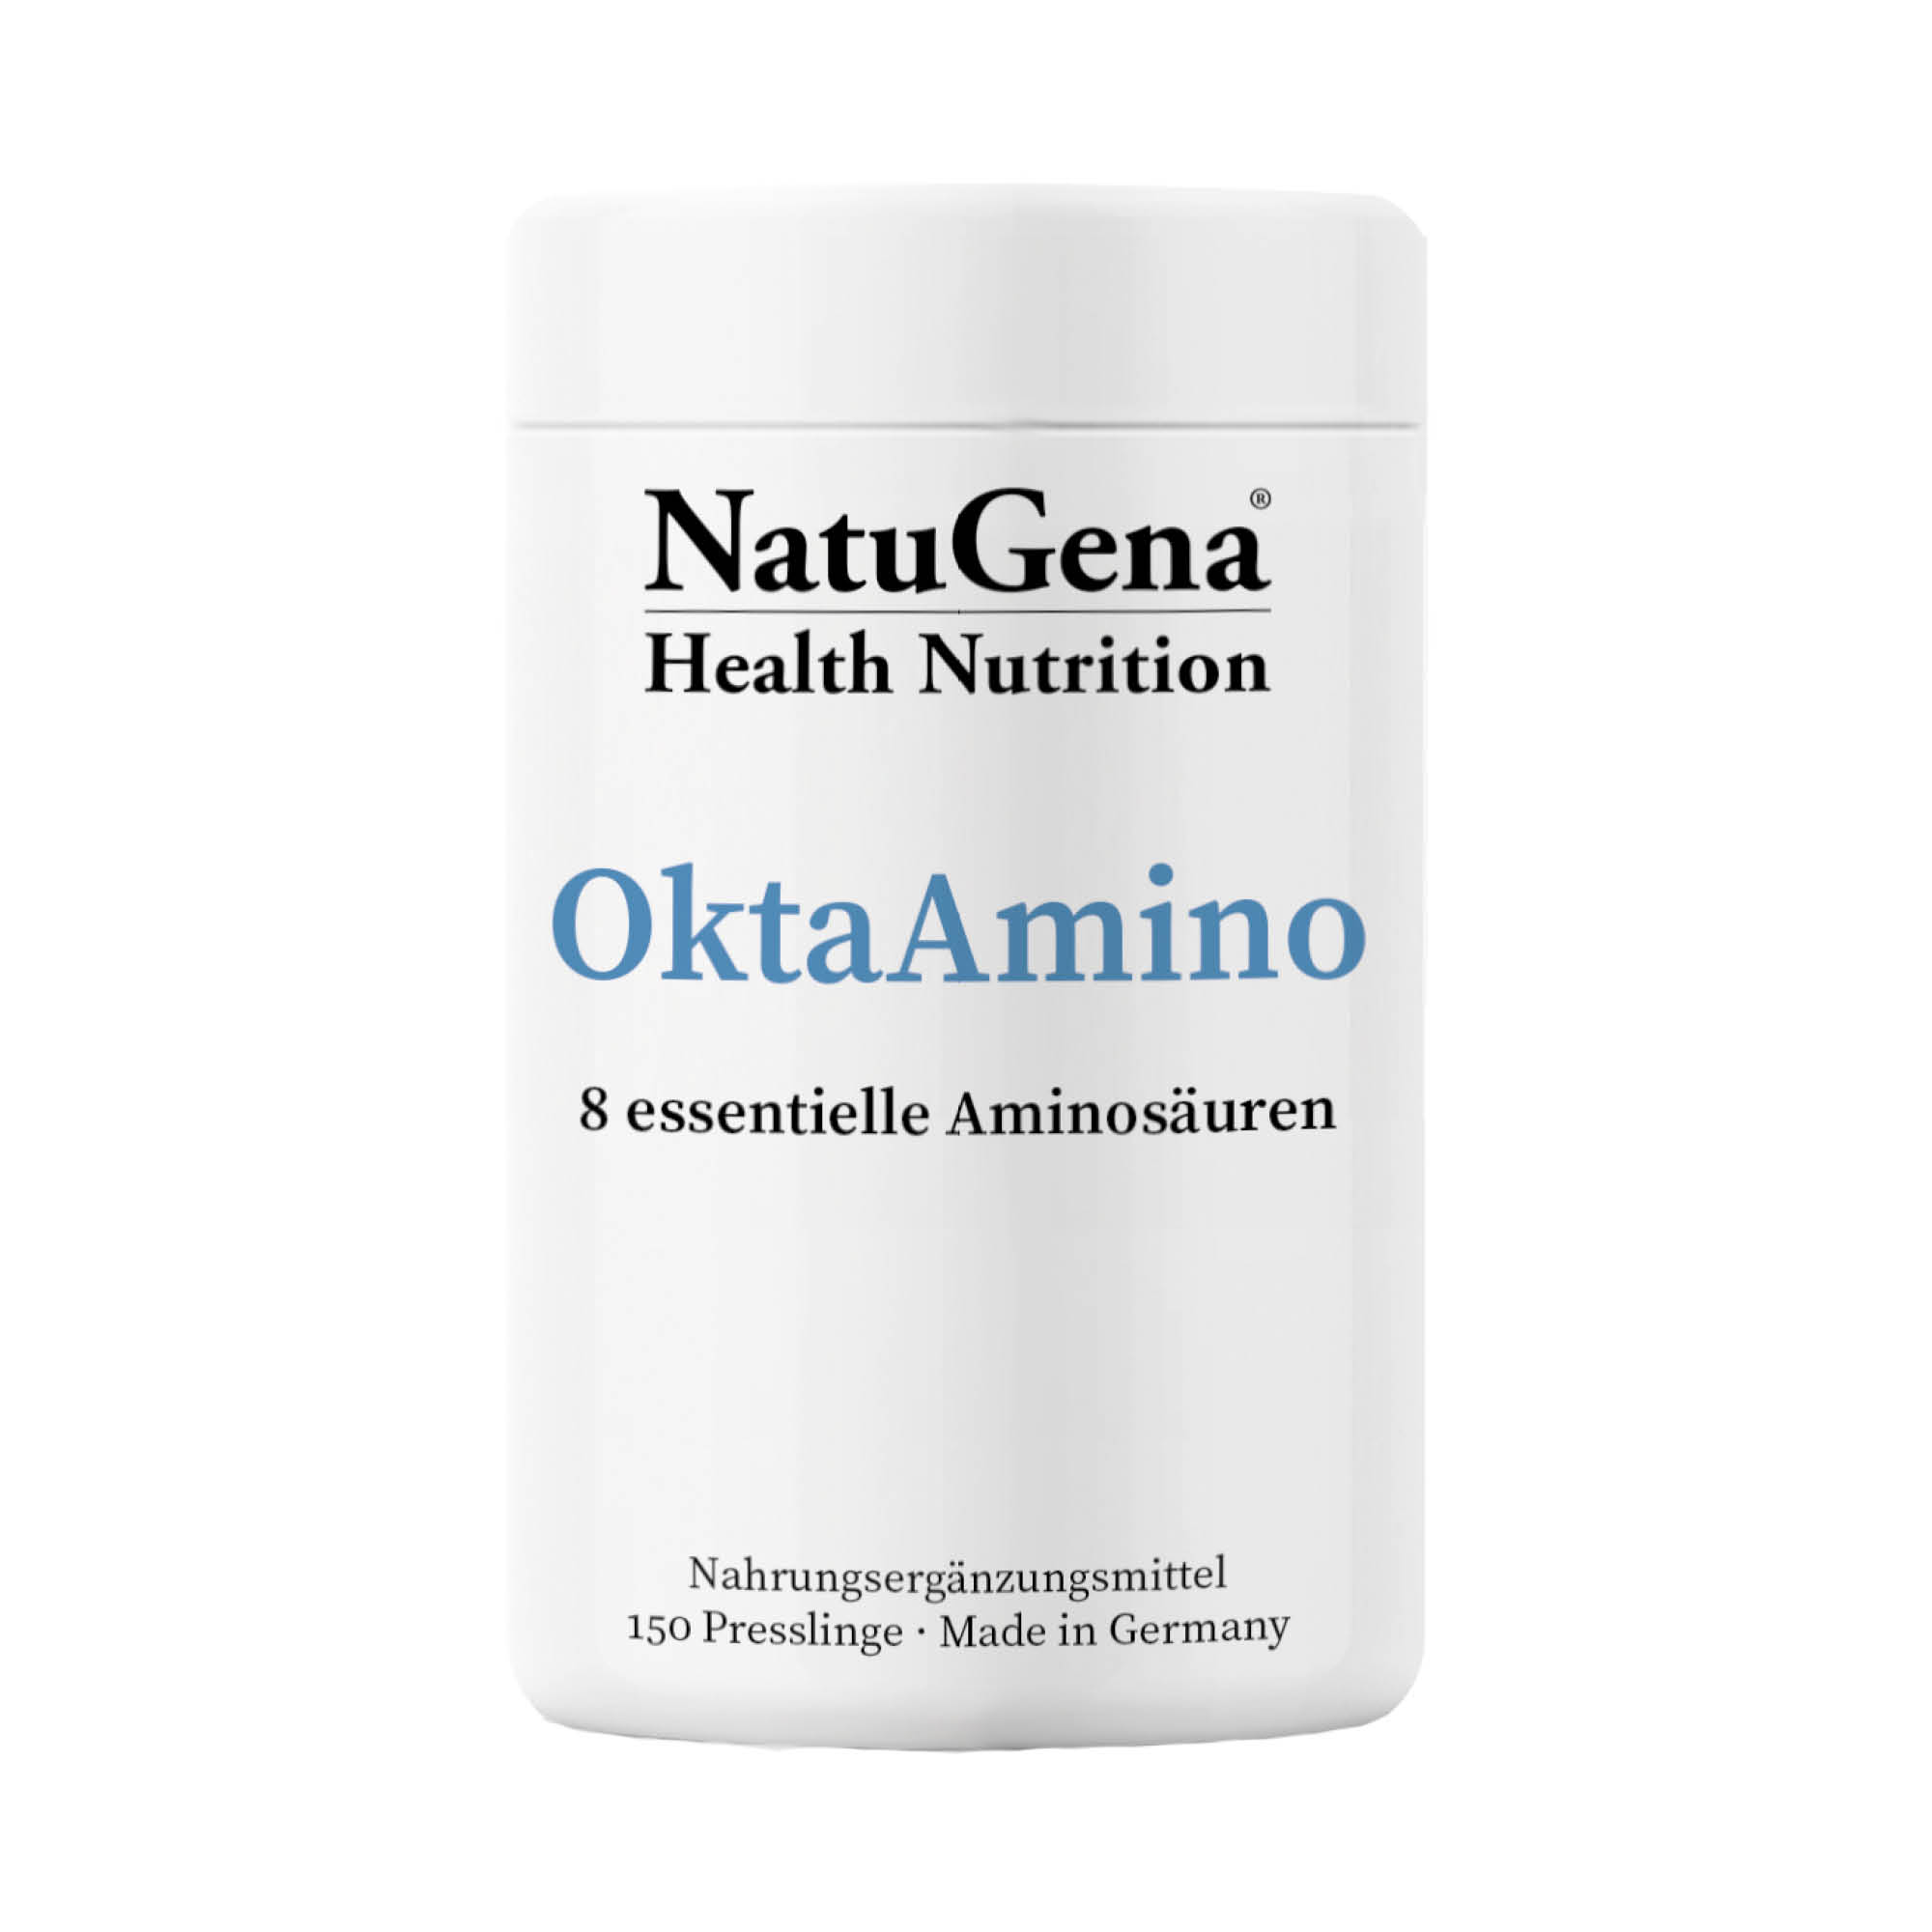 NatuGena OktaAmino | 150 Presslinge | 8 essentielle Aminosäuren